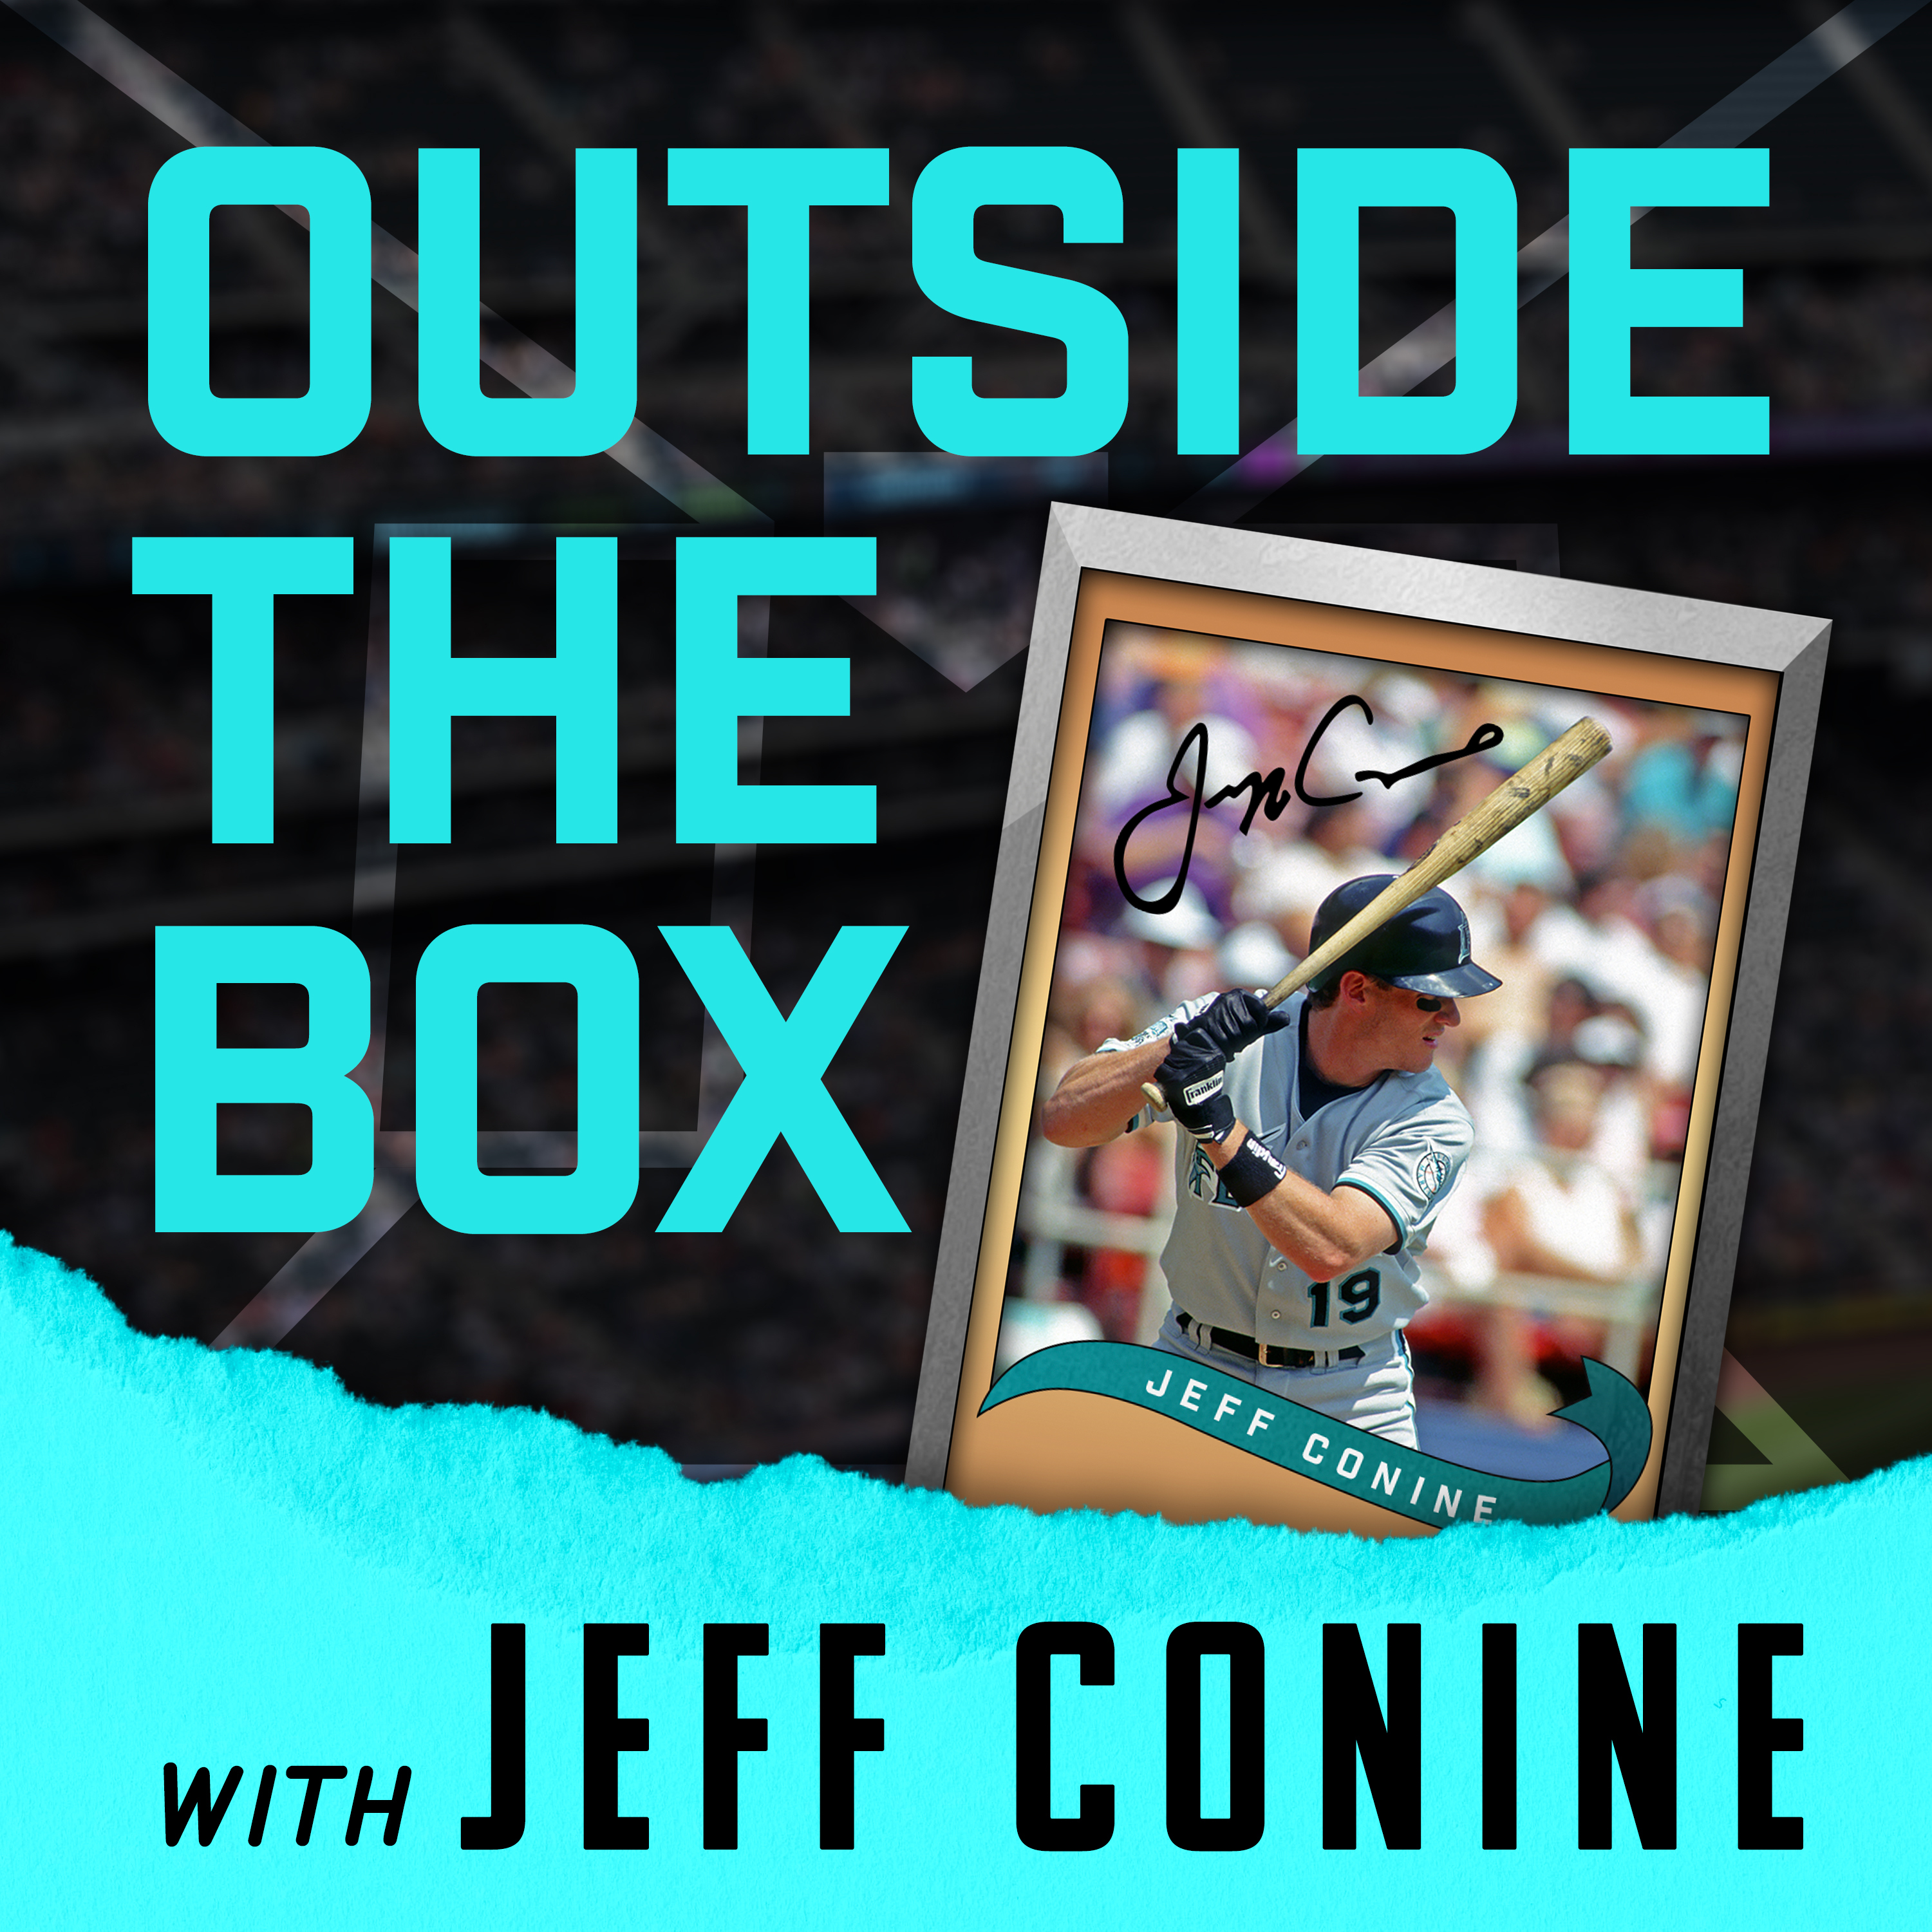 Jeff Conine Fantasy Statistics